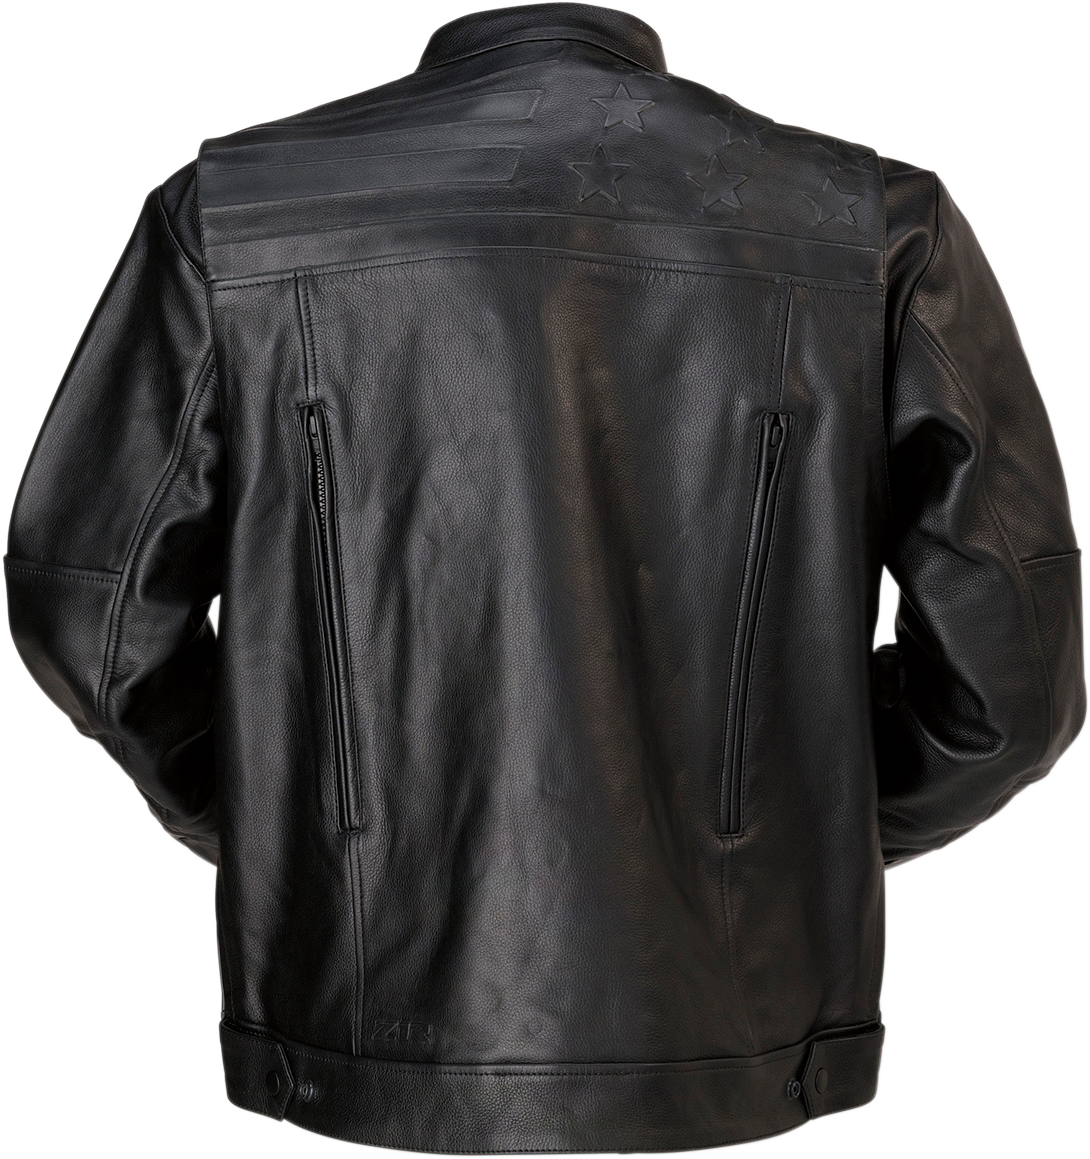 Z1R Deagle Leather Jacket - Black - 4XL 2810-3763